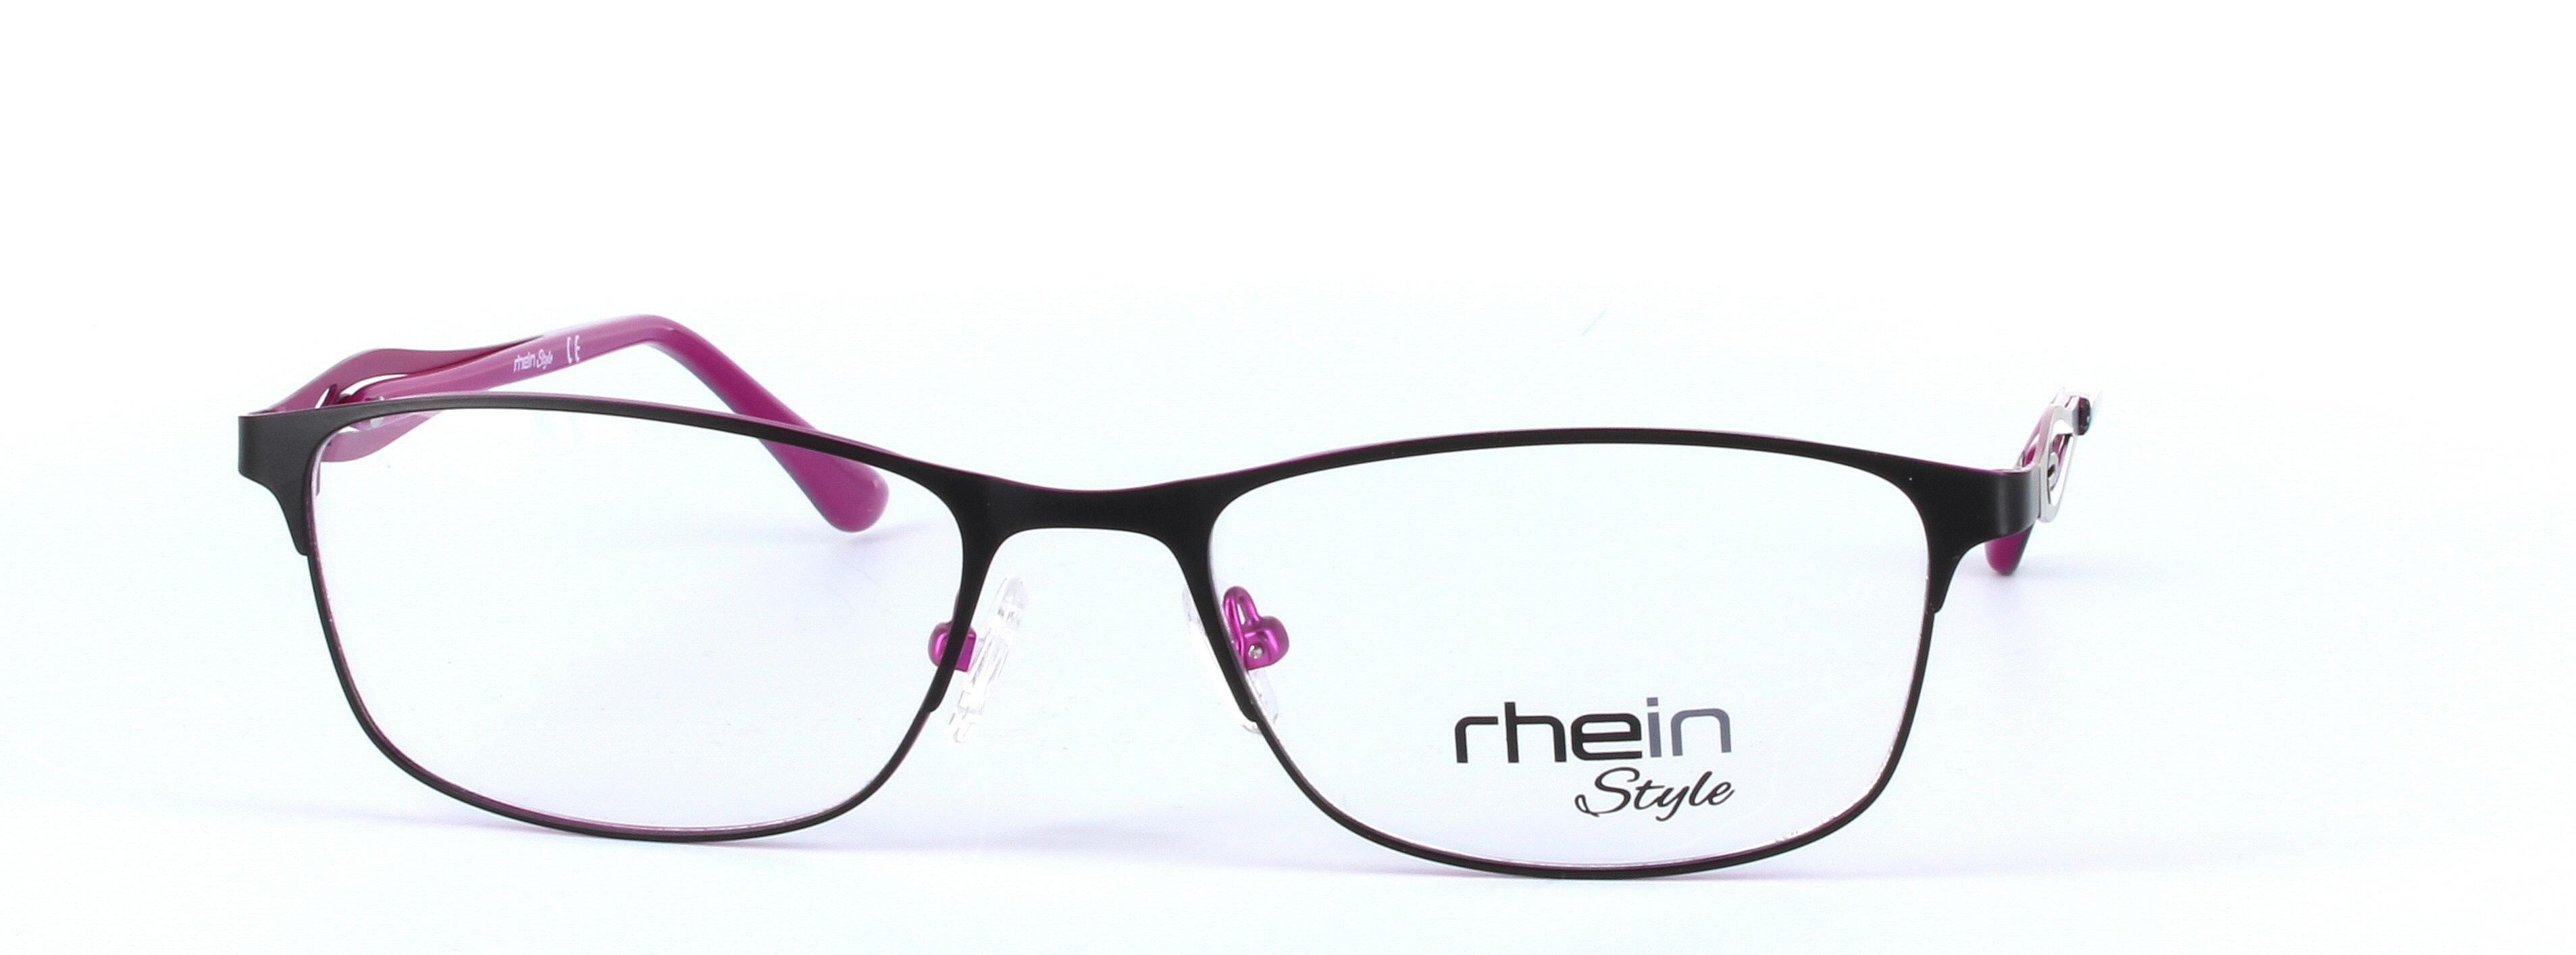 Canberra Black and Pink Full Rim Rectangular Metal Glasses - Image View 5